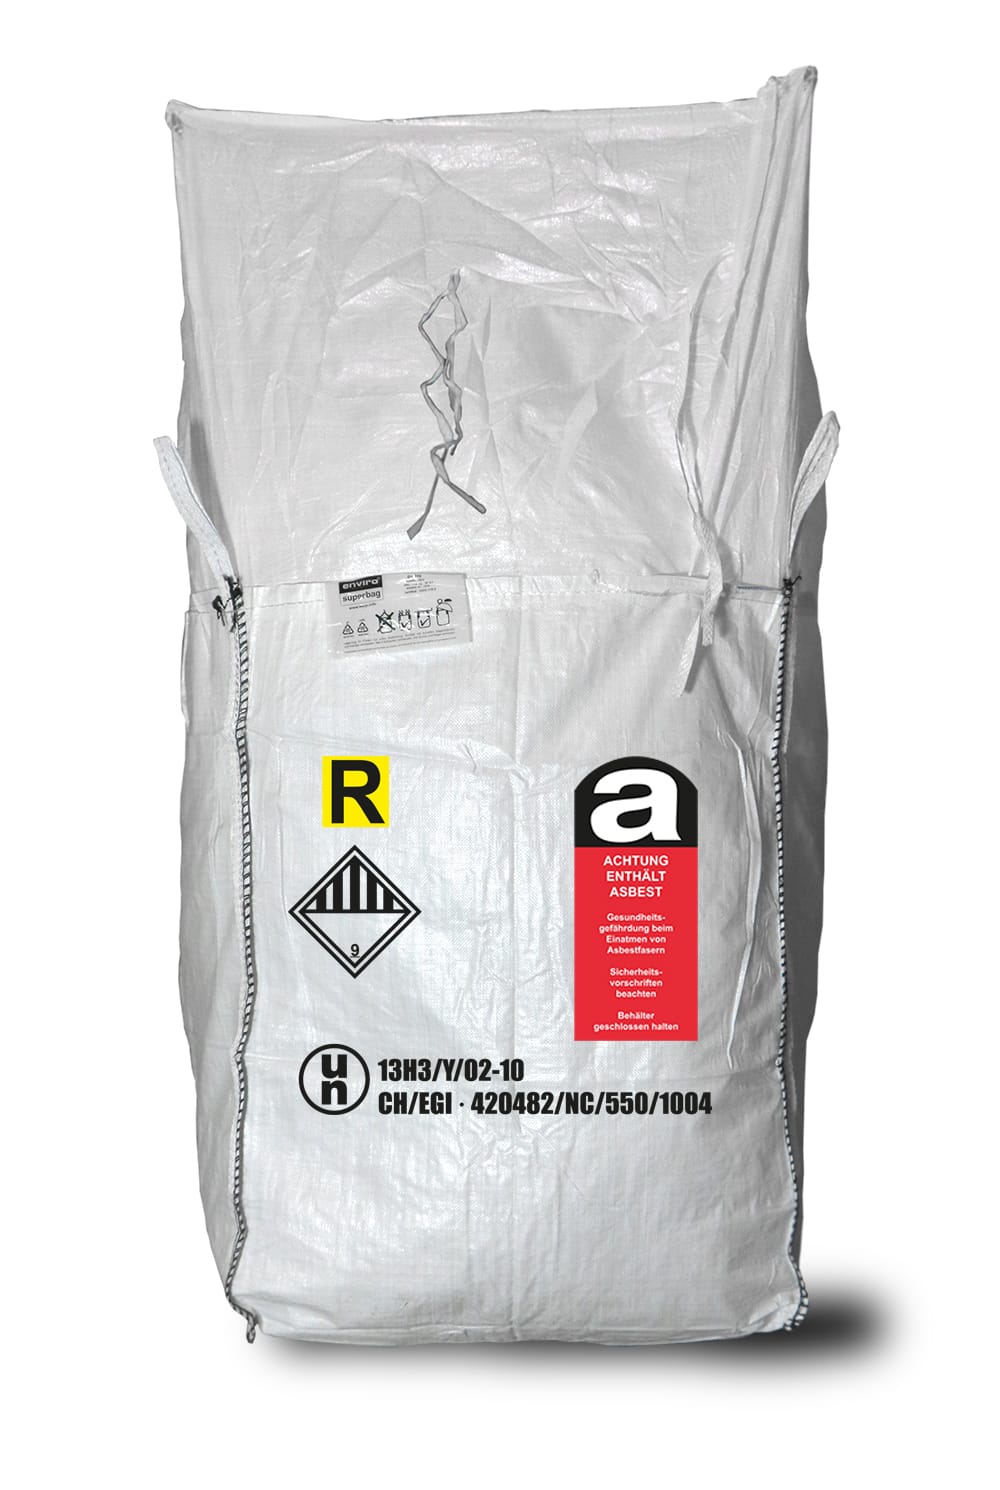 UN Gefahrgut Big Bag 90 x 90 x 105 cm, Asbestaufdruck 1-seitig, Einfüllschürze, HDPE-Inliner